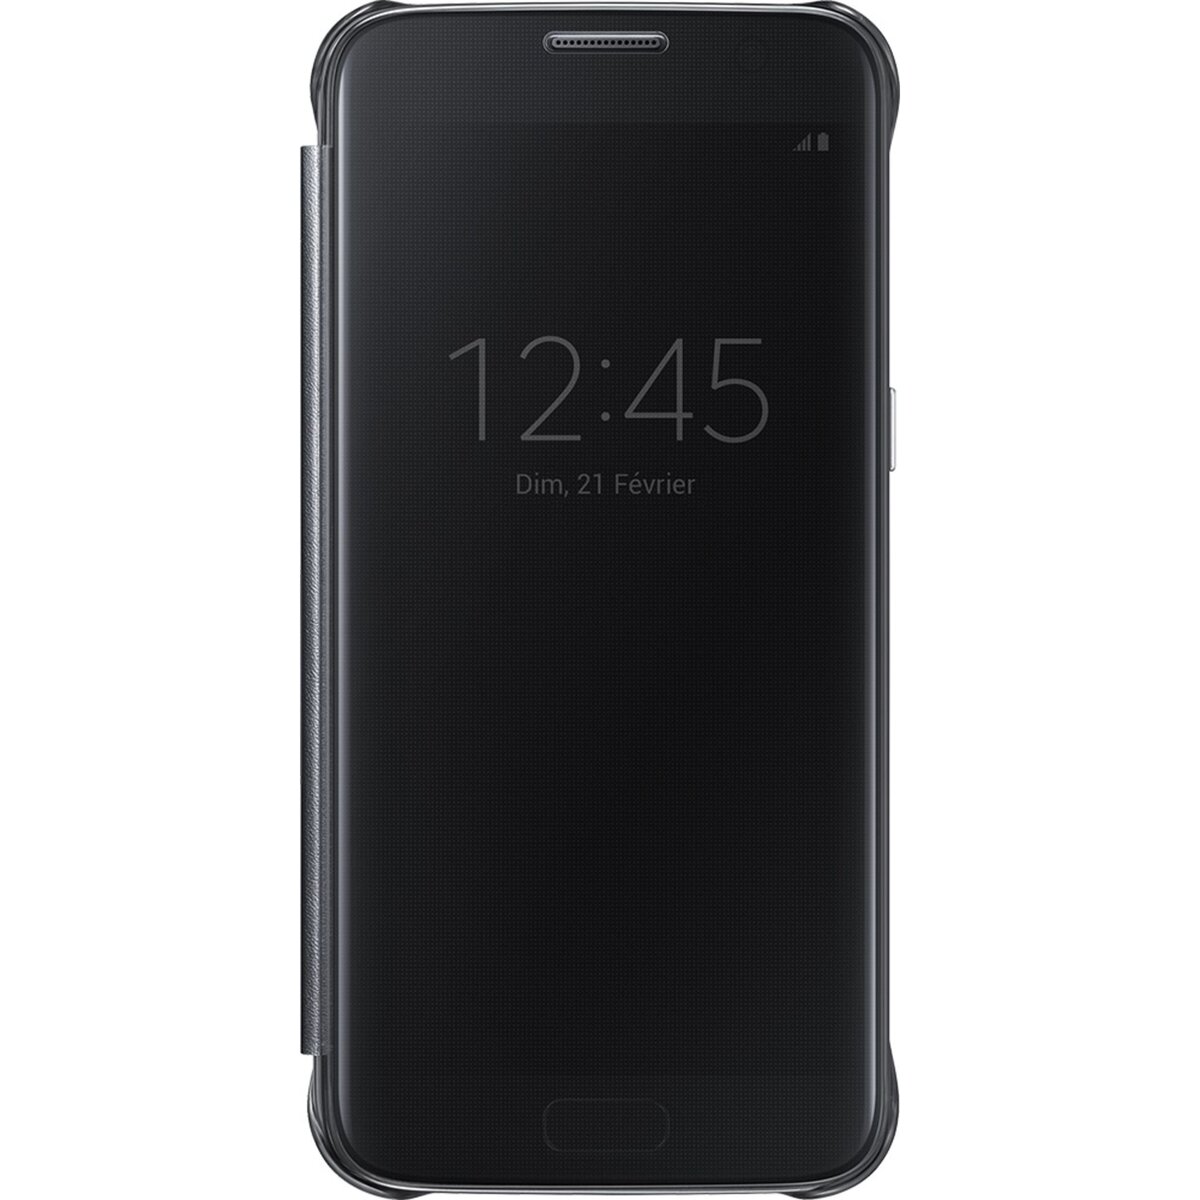 SAMSUNG Etui folio pour Galaxy S8+ Edge - Noir